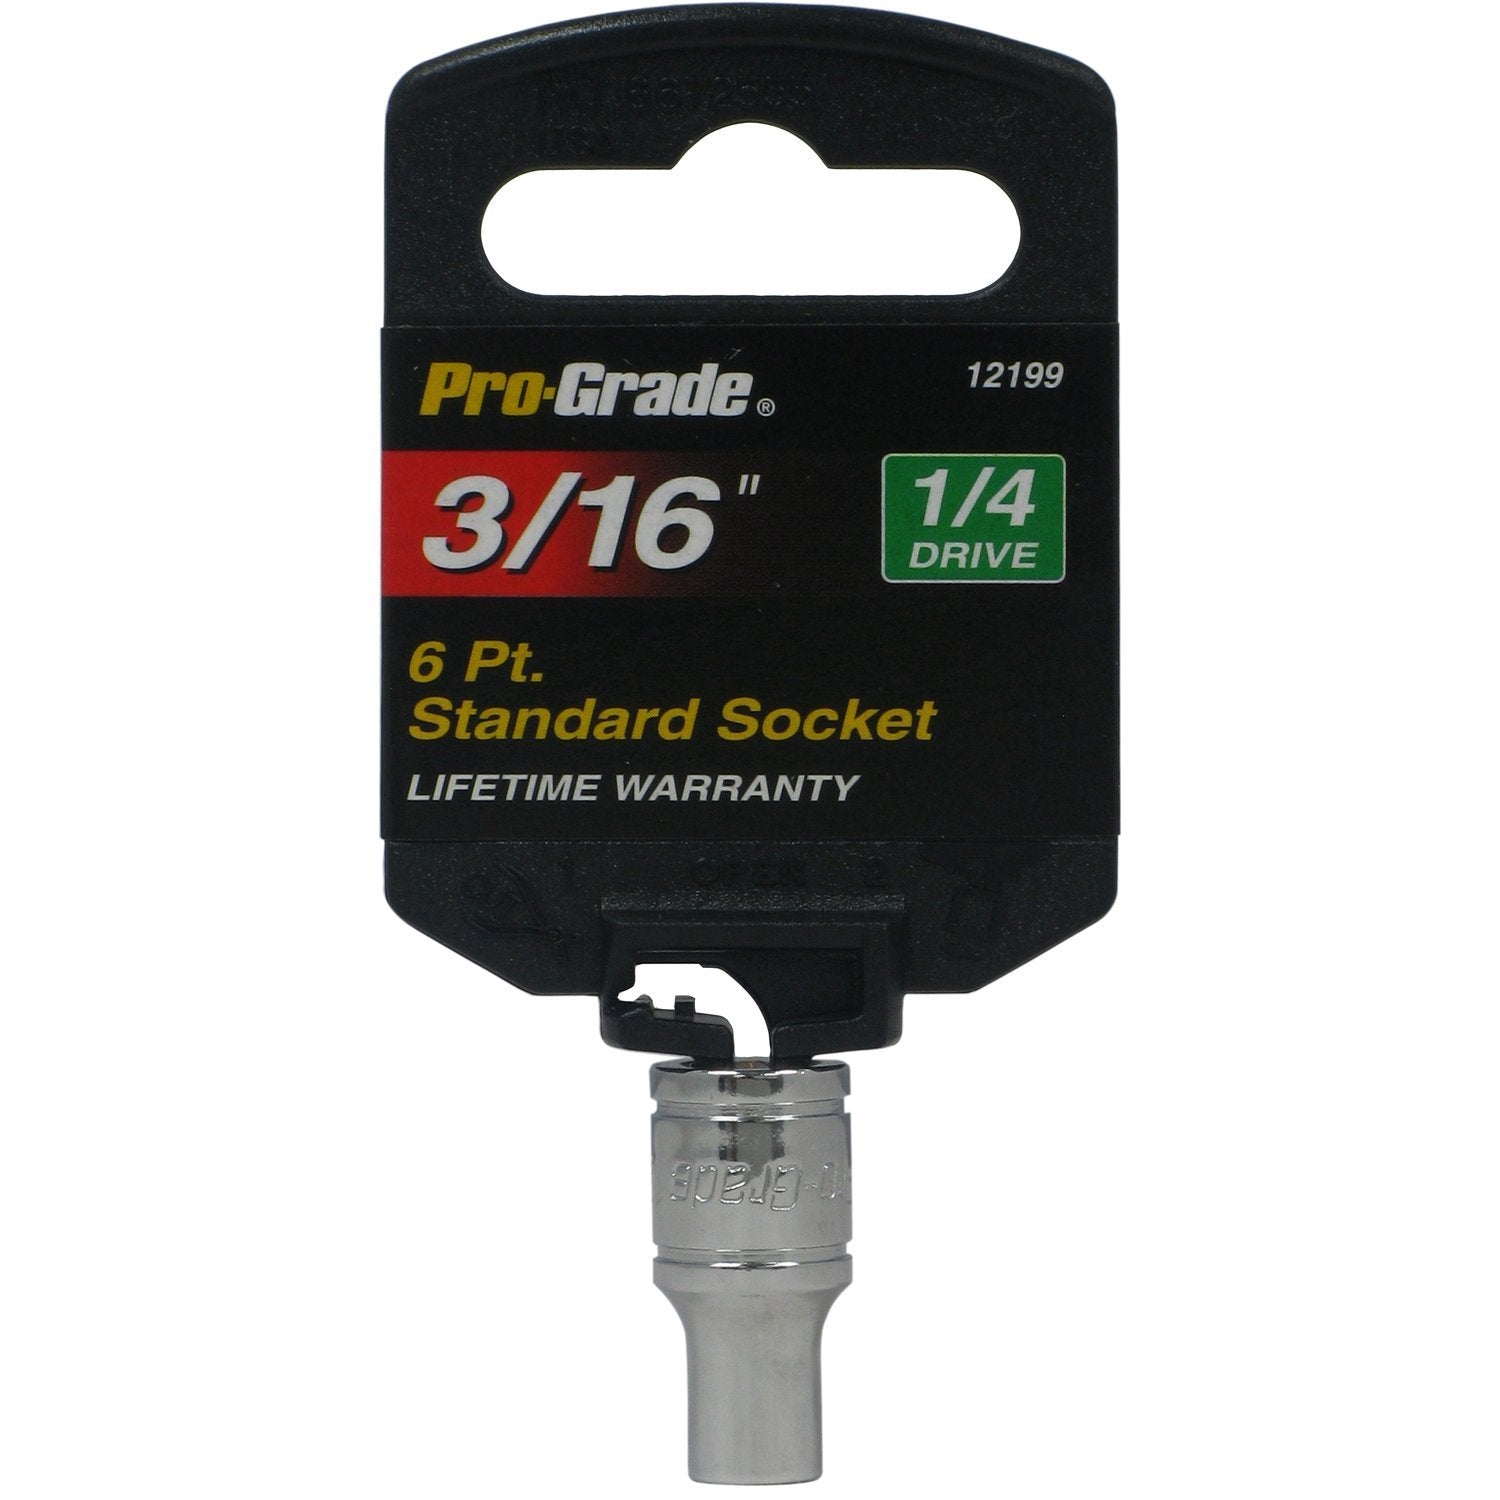 Pro Grade 1/4" Drive 3/16" Standard Socket 6 Point Chrome Vanadium Steel 12199